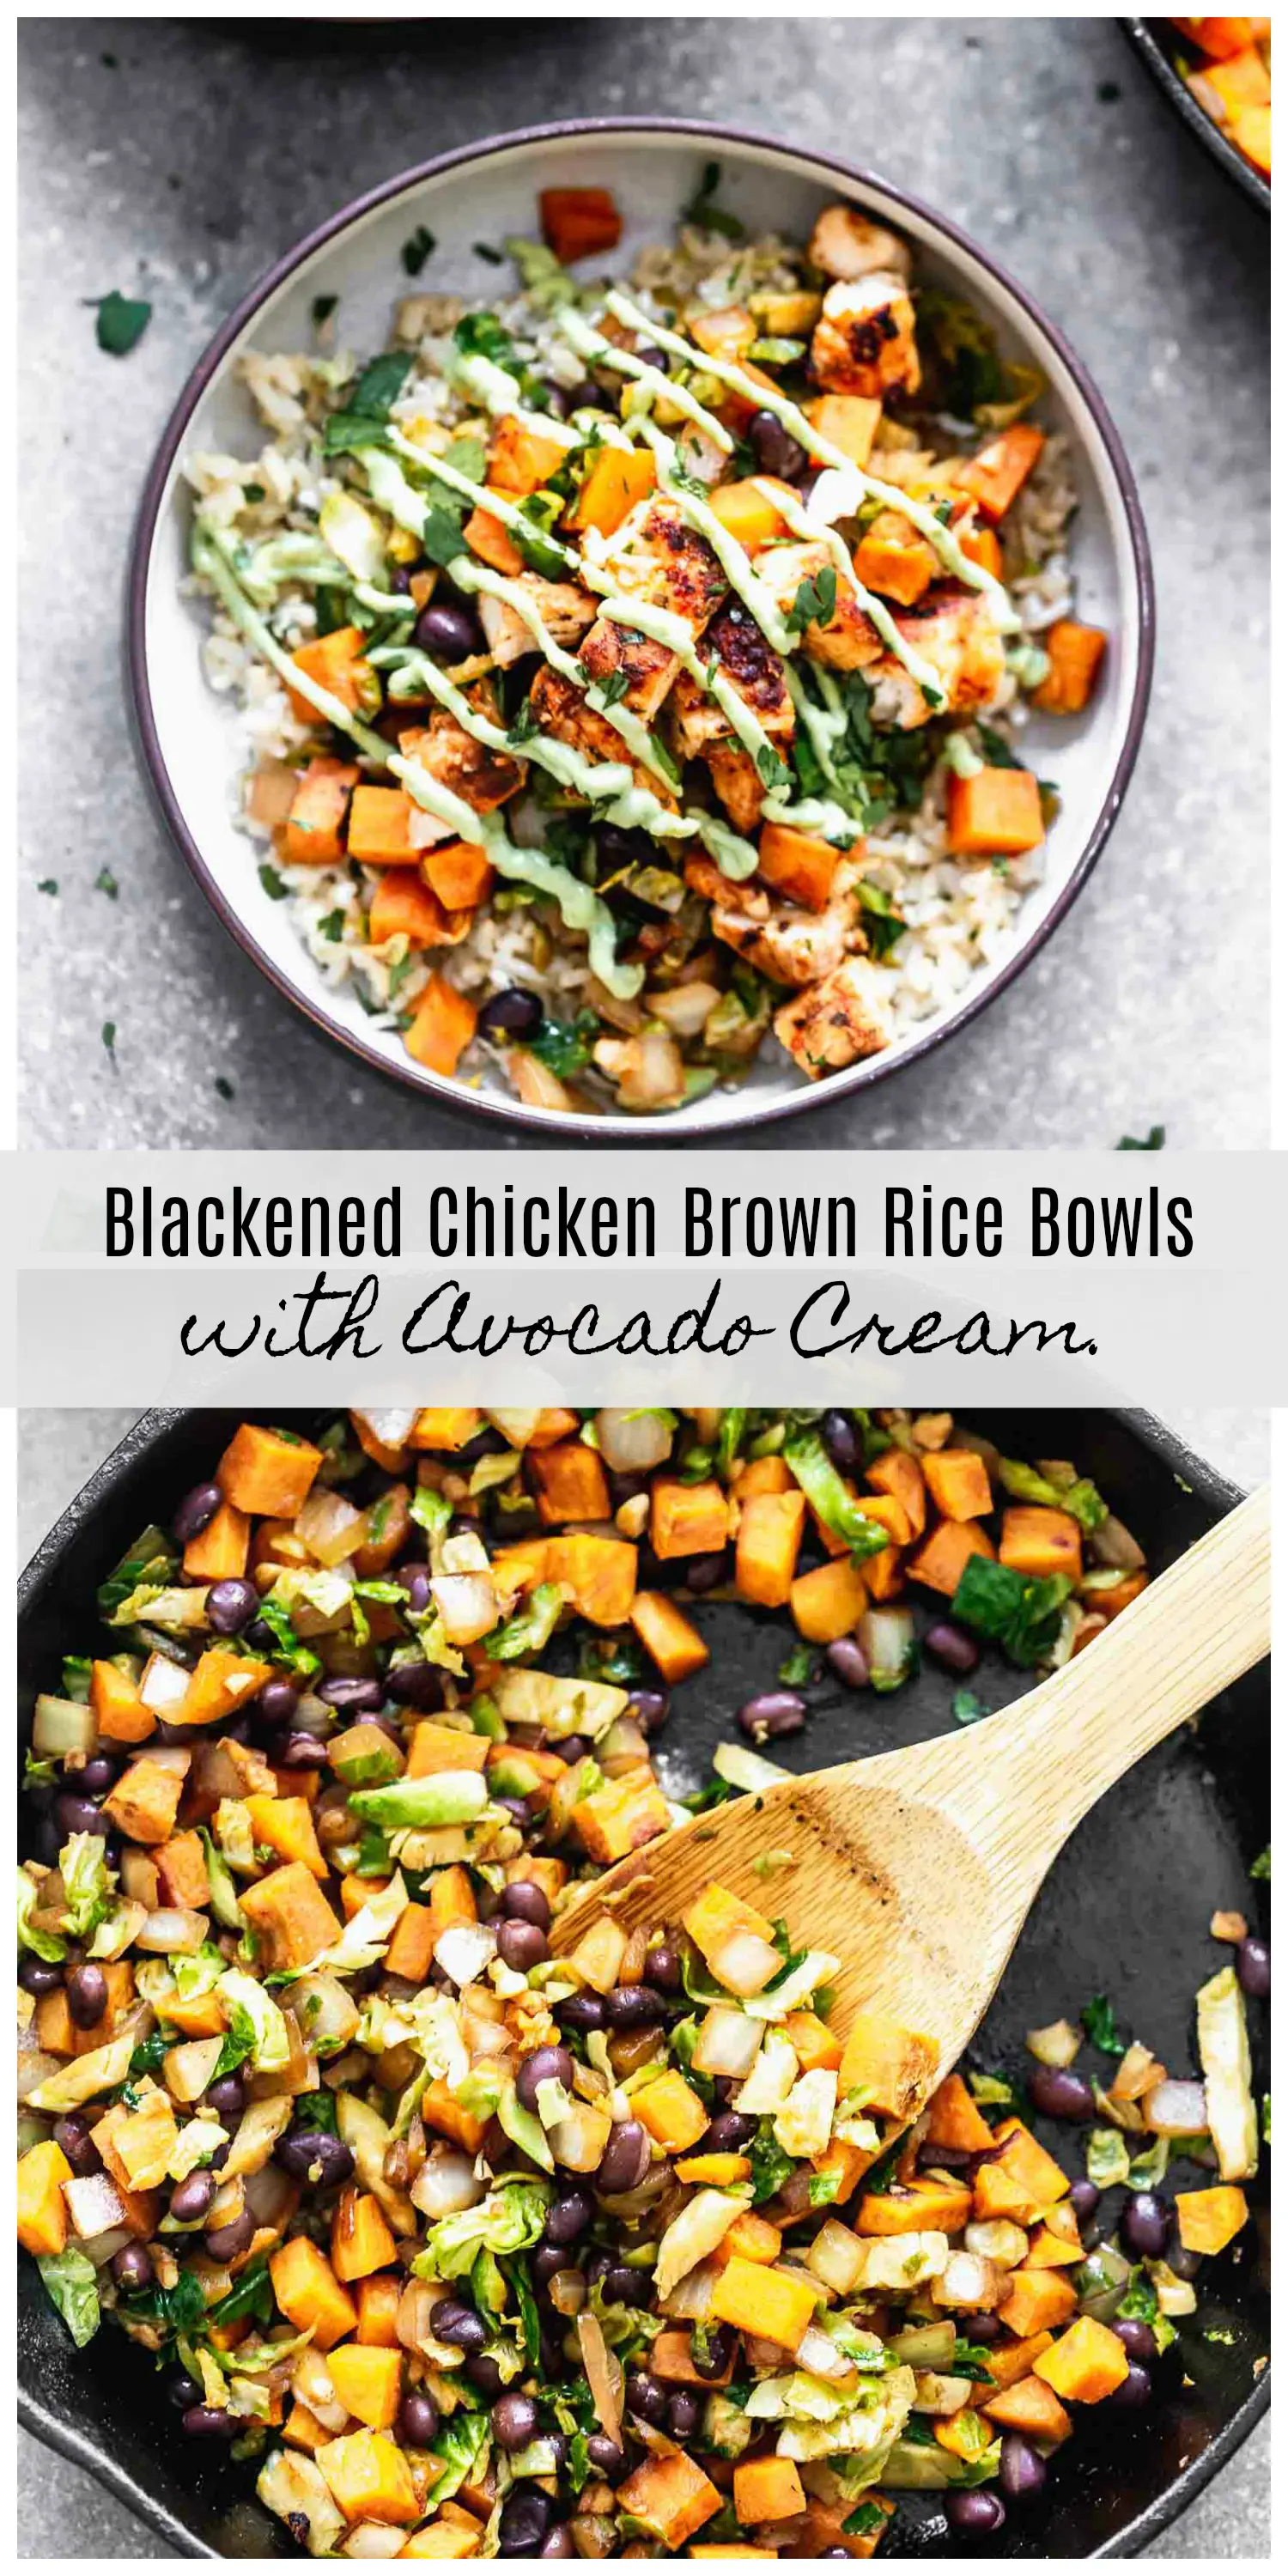 Blackened Chicken Brown Rice Bowls with Avocado Cream